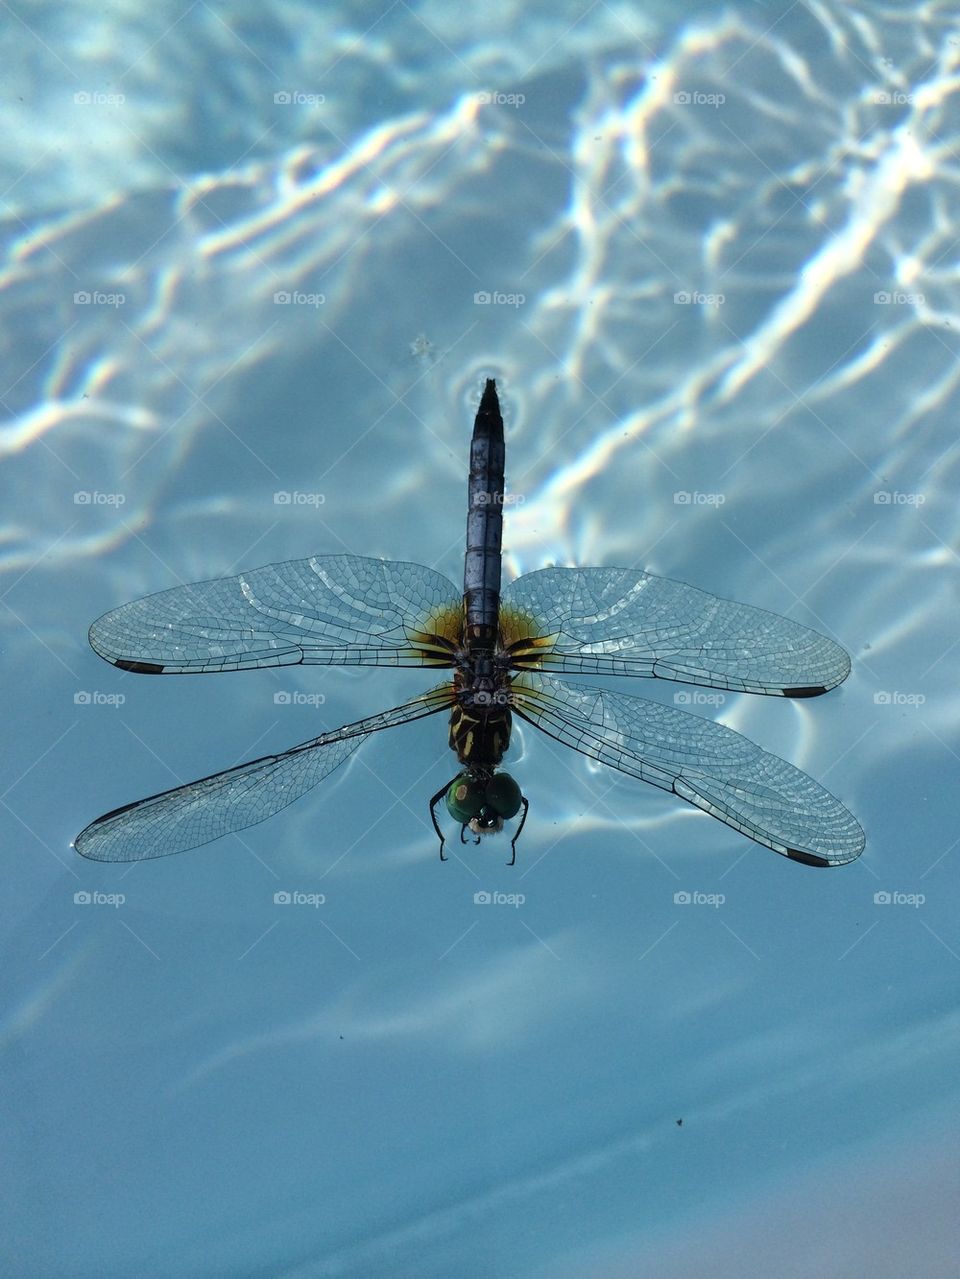 Dragonfly over the idyllic lake